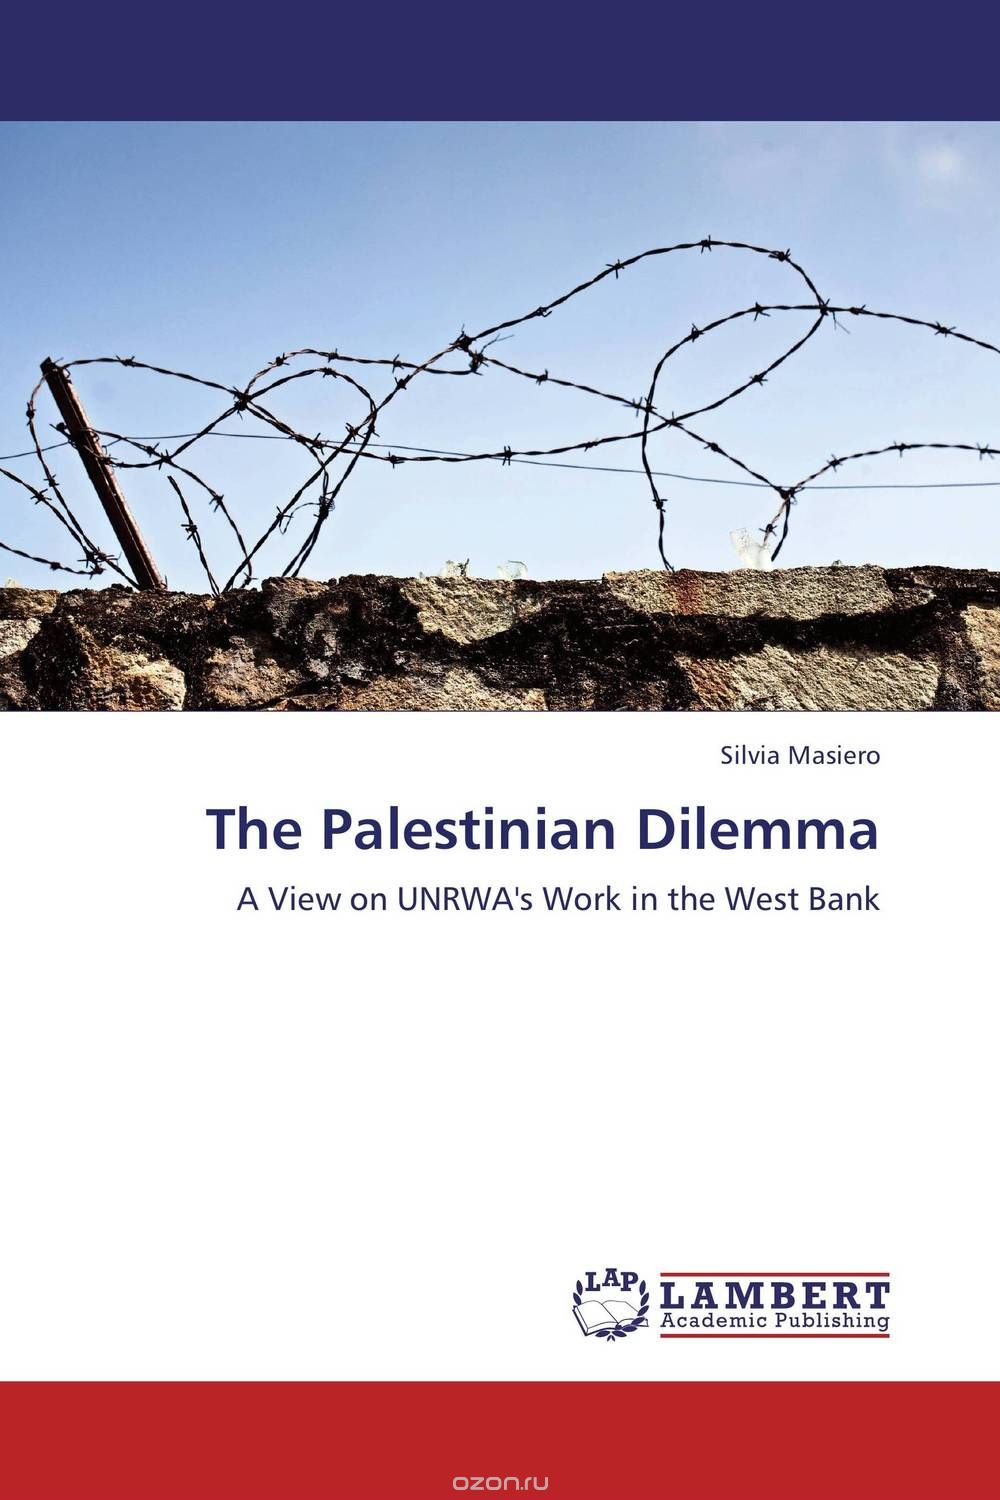 Скачать книгу "The Palestinian Dilemma"